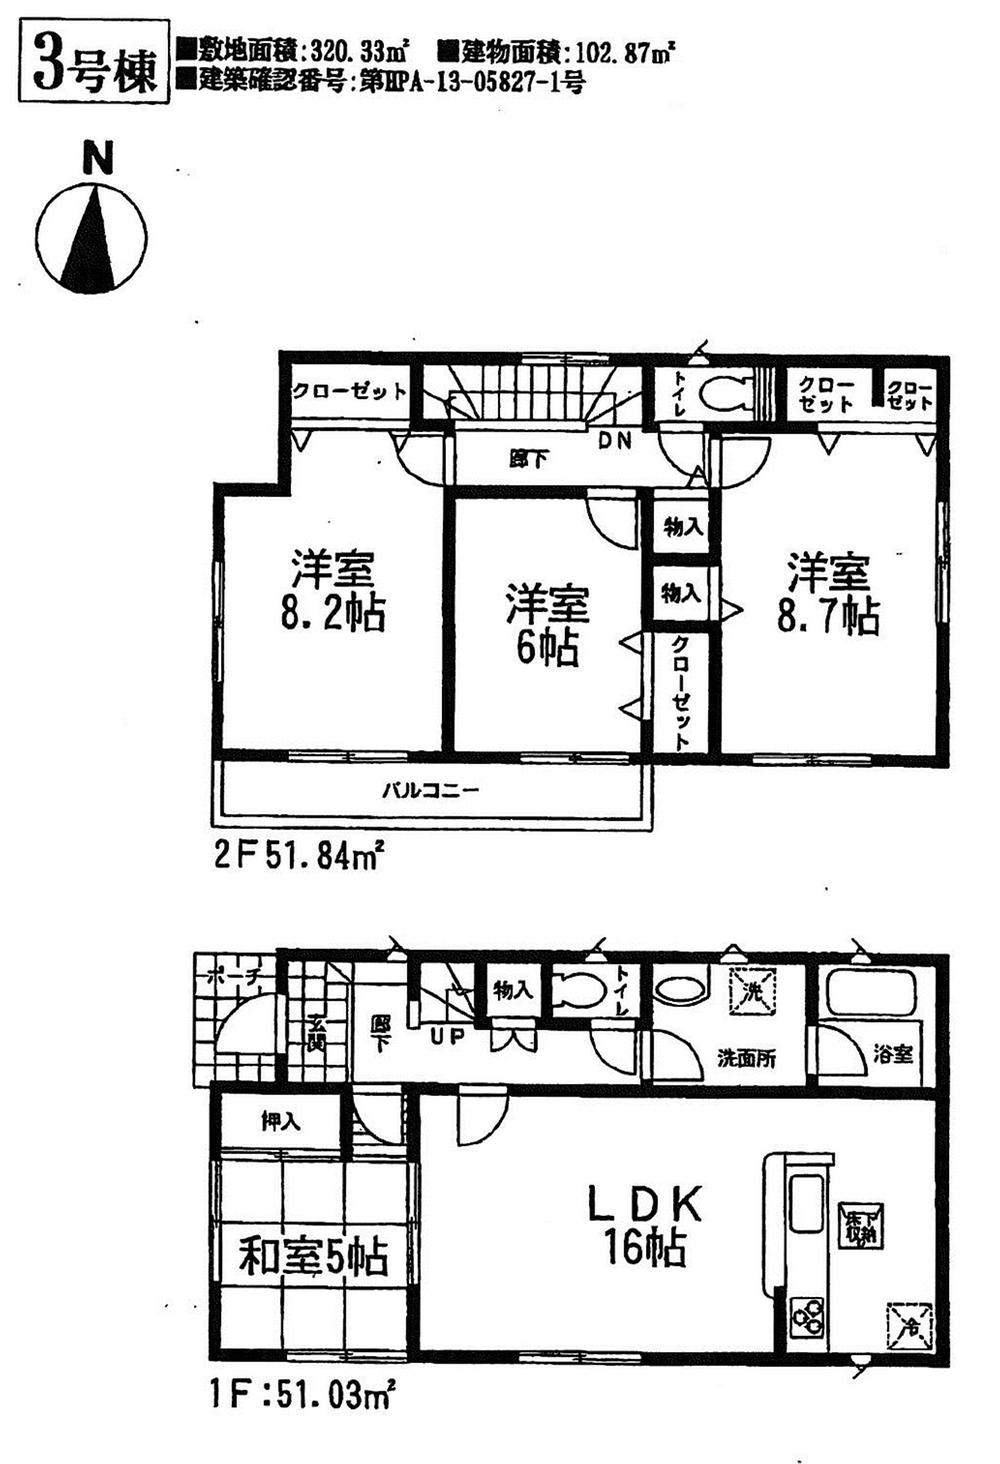 Floor plan. (3 Building), Price 19,800,000 yen, 4LDK, Land area 320.33 sq m , Building area 102.87 sq m